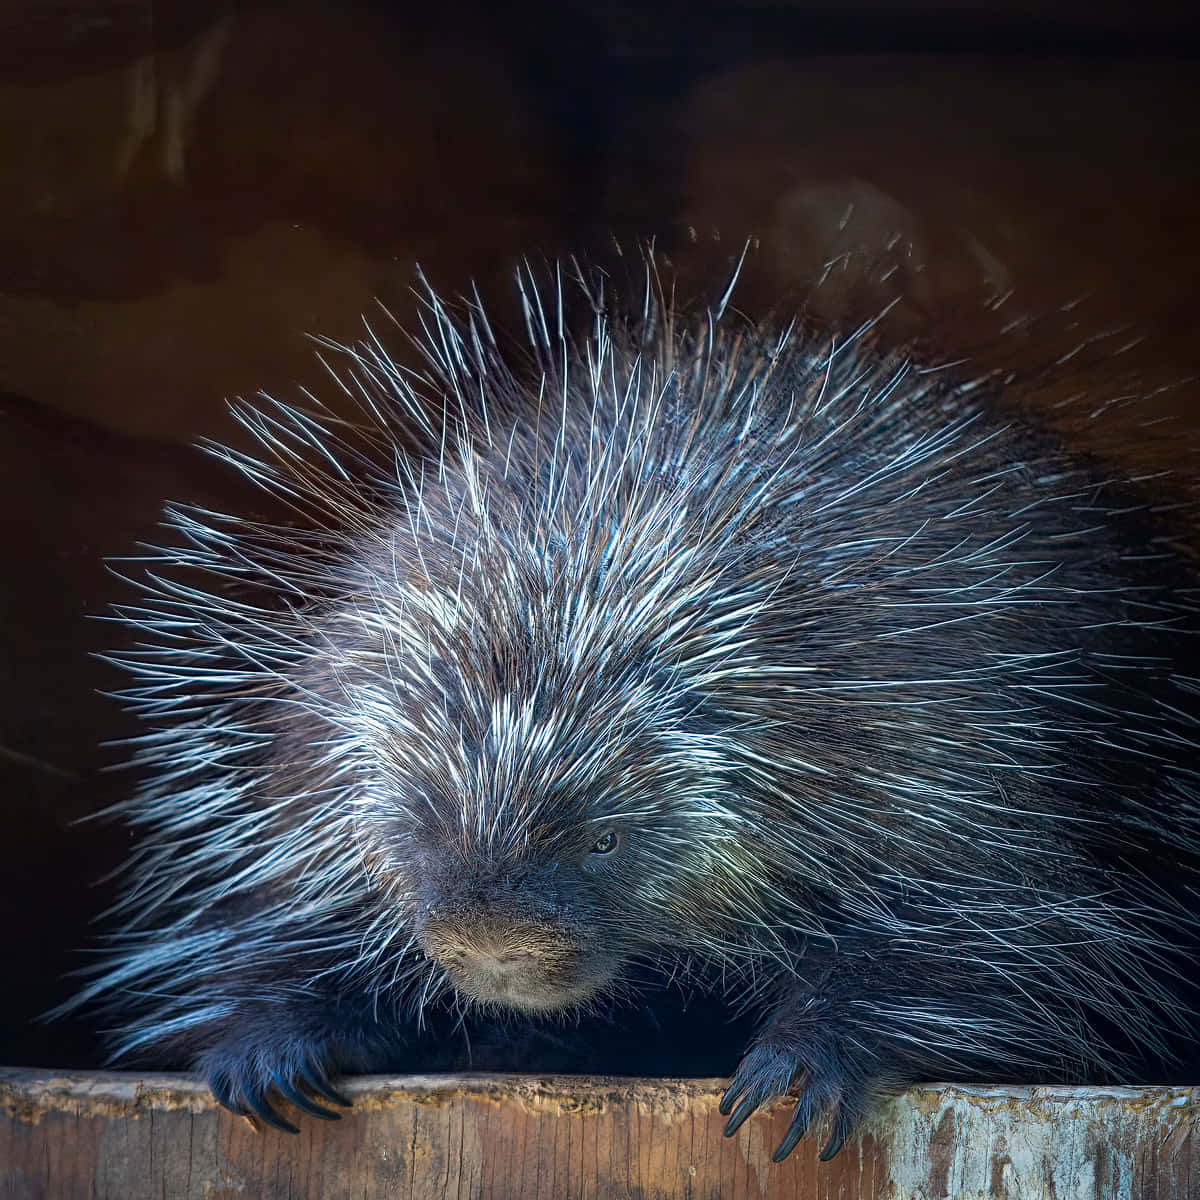 Enchanting Close-up Shot of an Adorable Porcupine